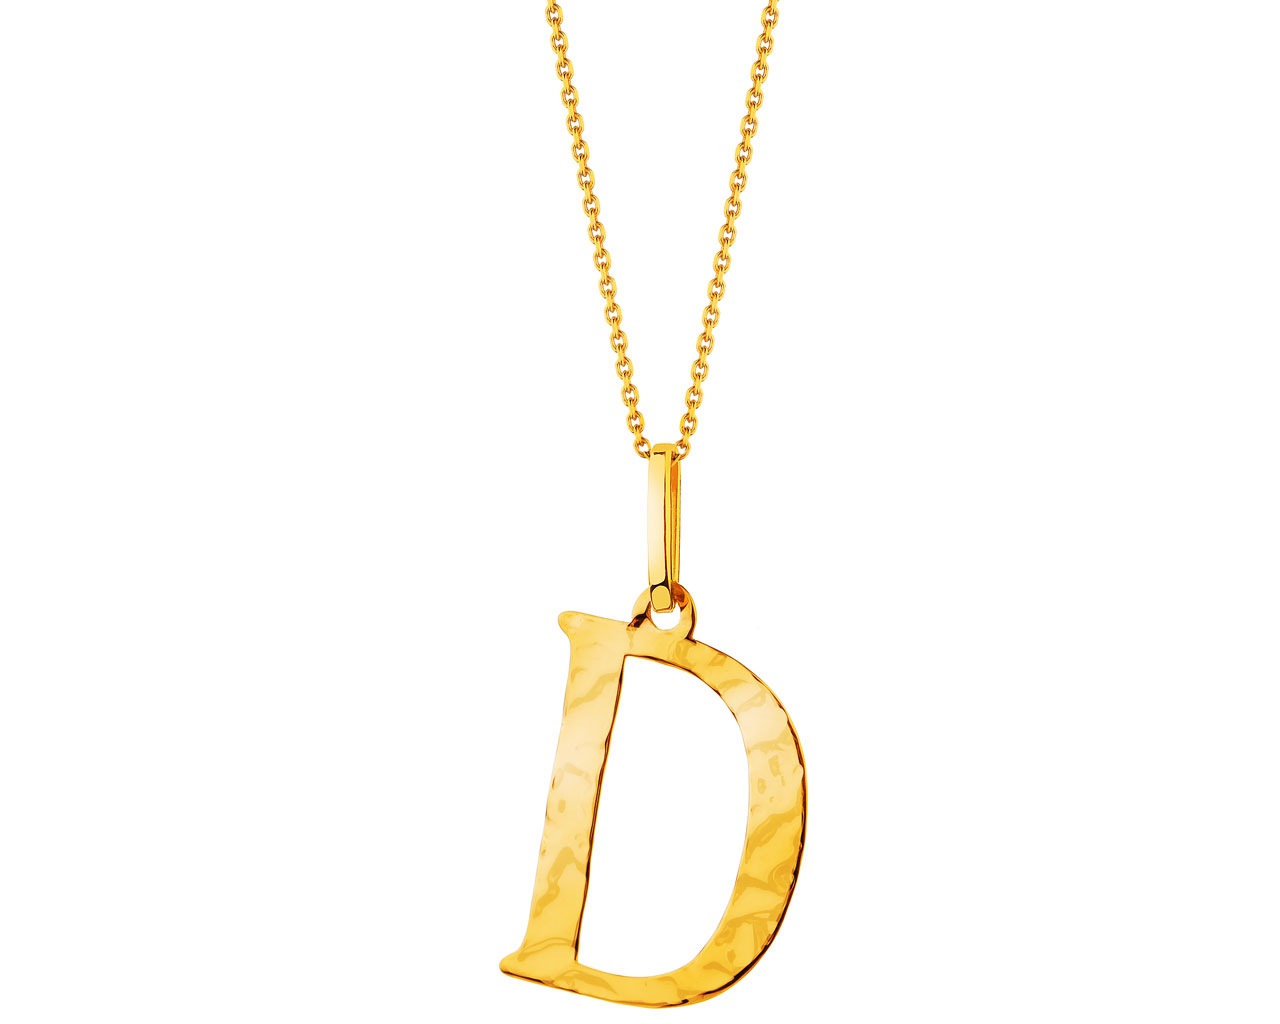 Złota zawieszka - litera D